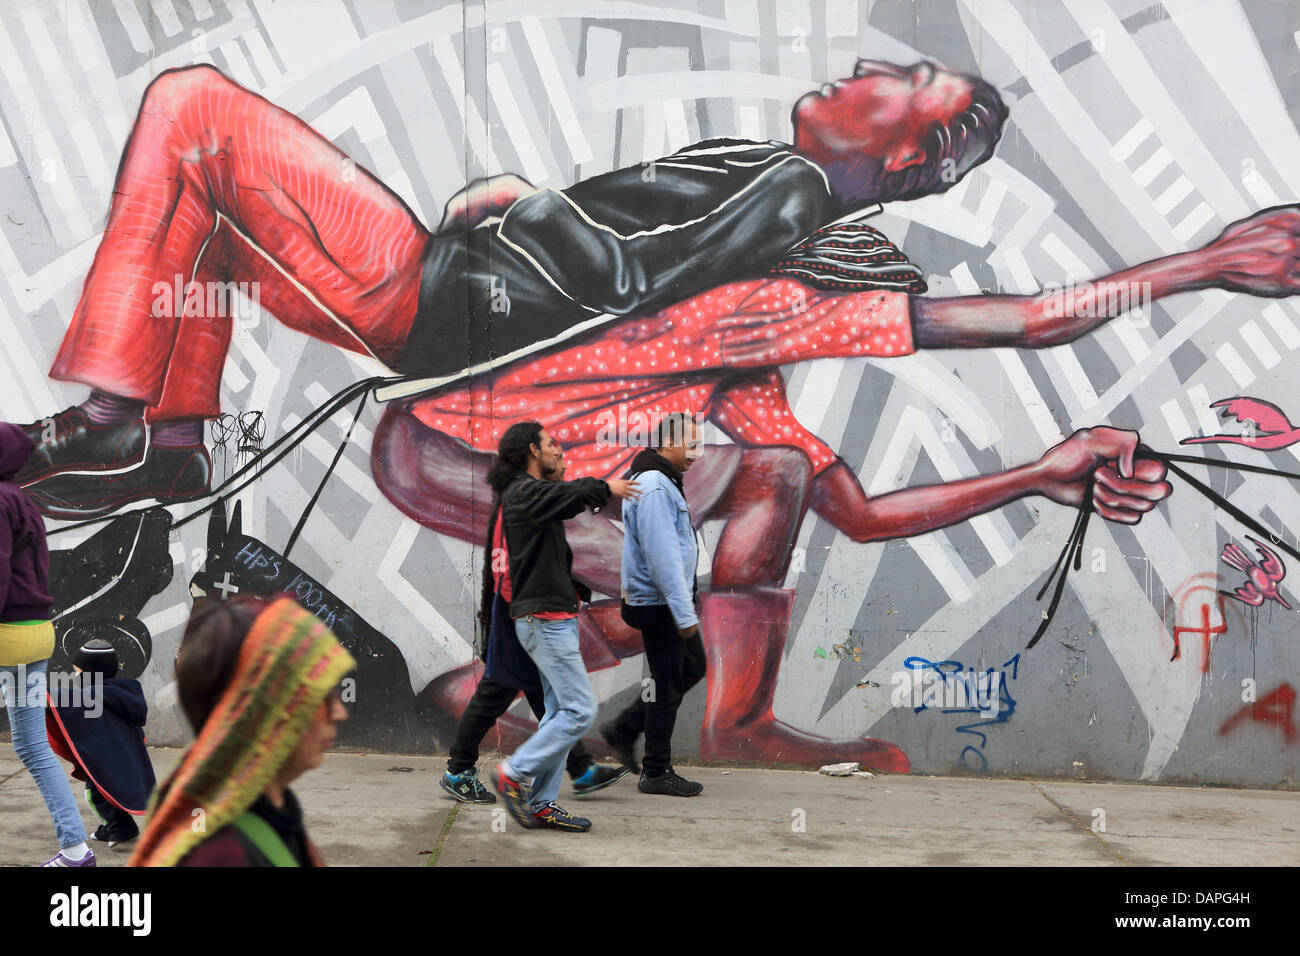 Pedestrians walking past street art graffiti mural in La Candelaria barrio of Bogota, Colombia. Stock Photo